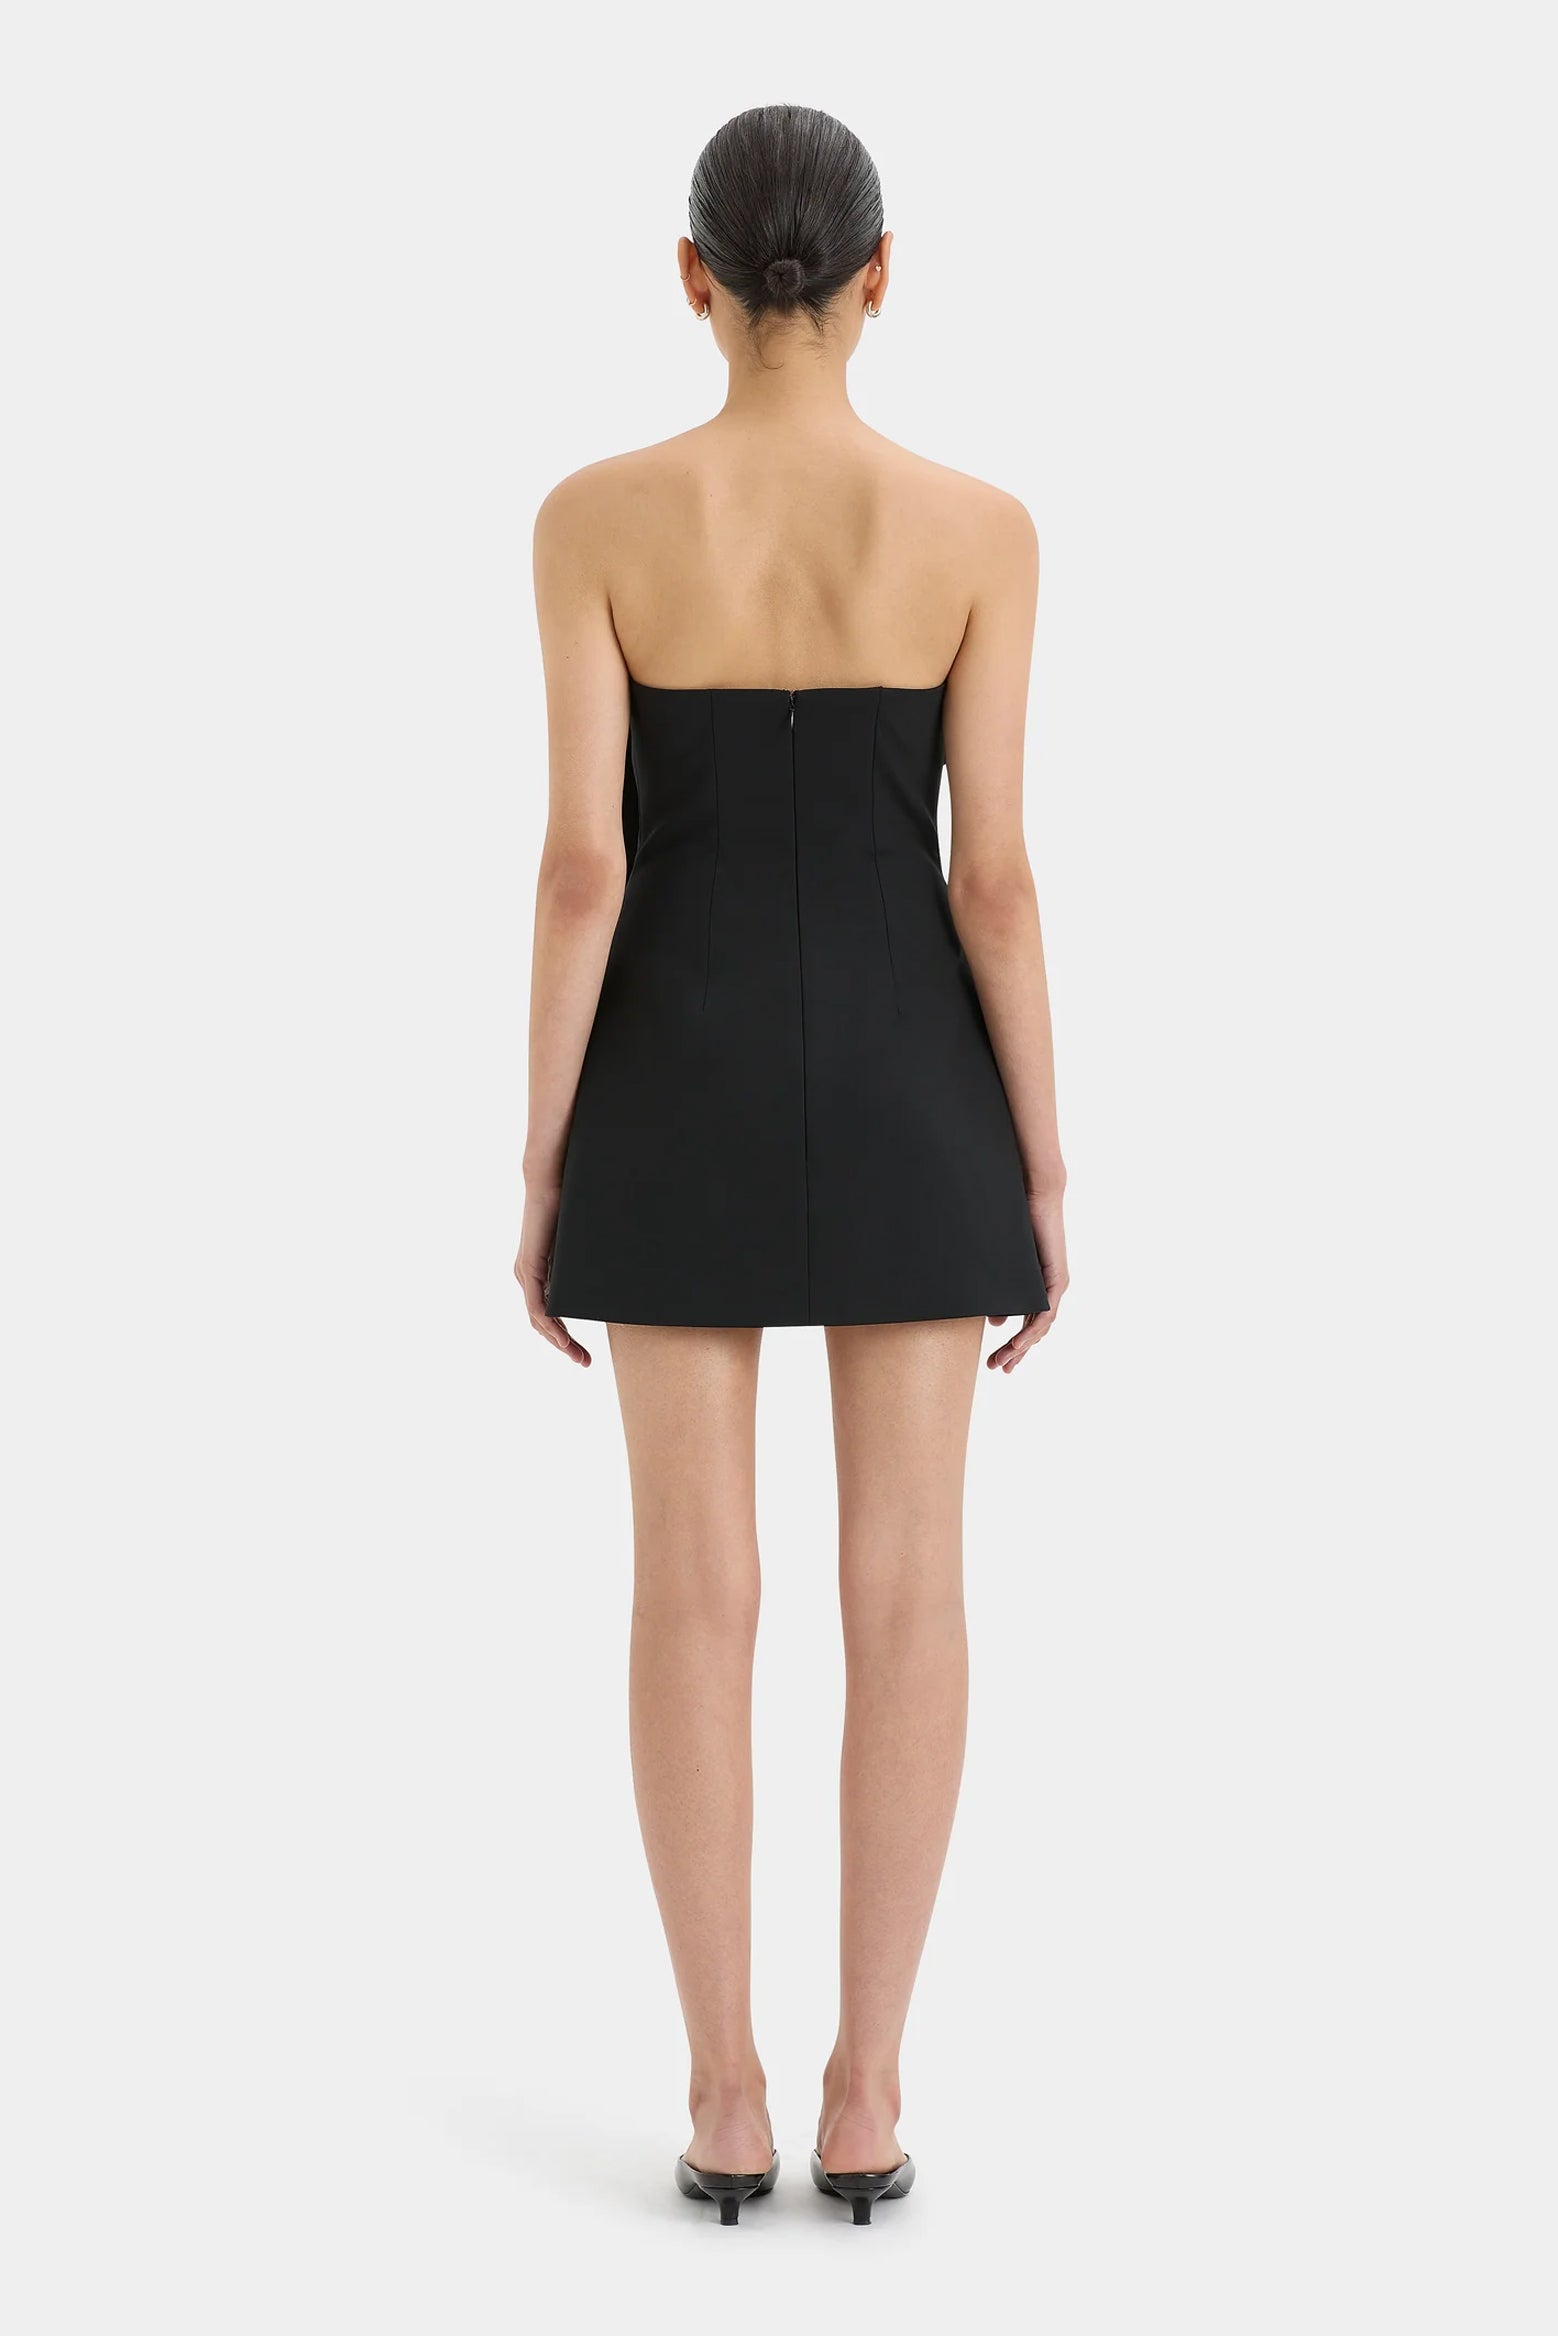 SIR Leonardo Mini Dress in Black available at The New Trend Australia.